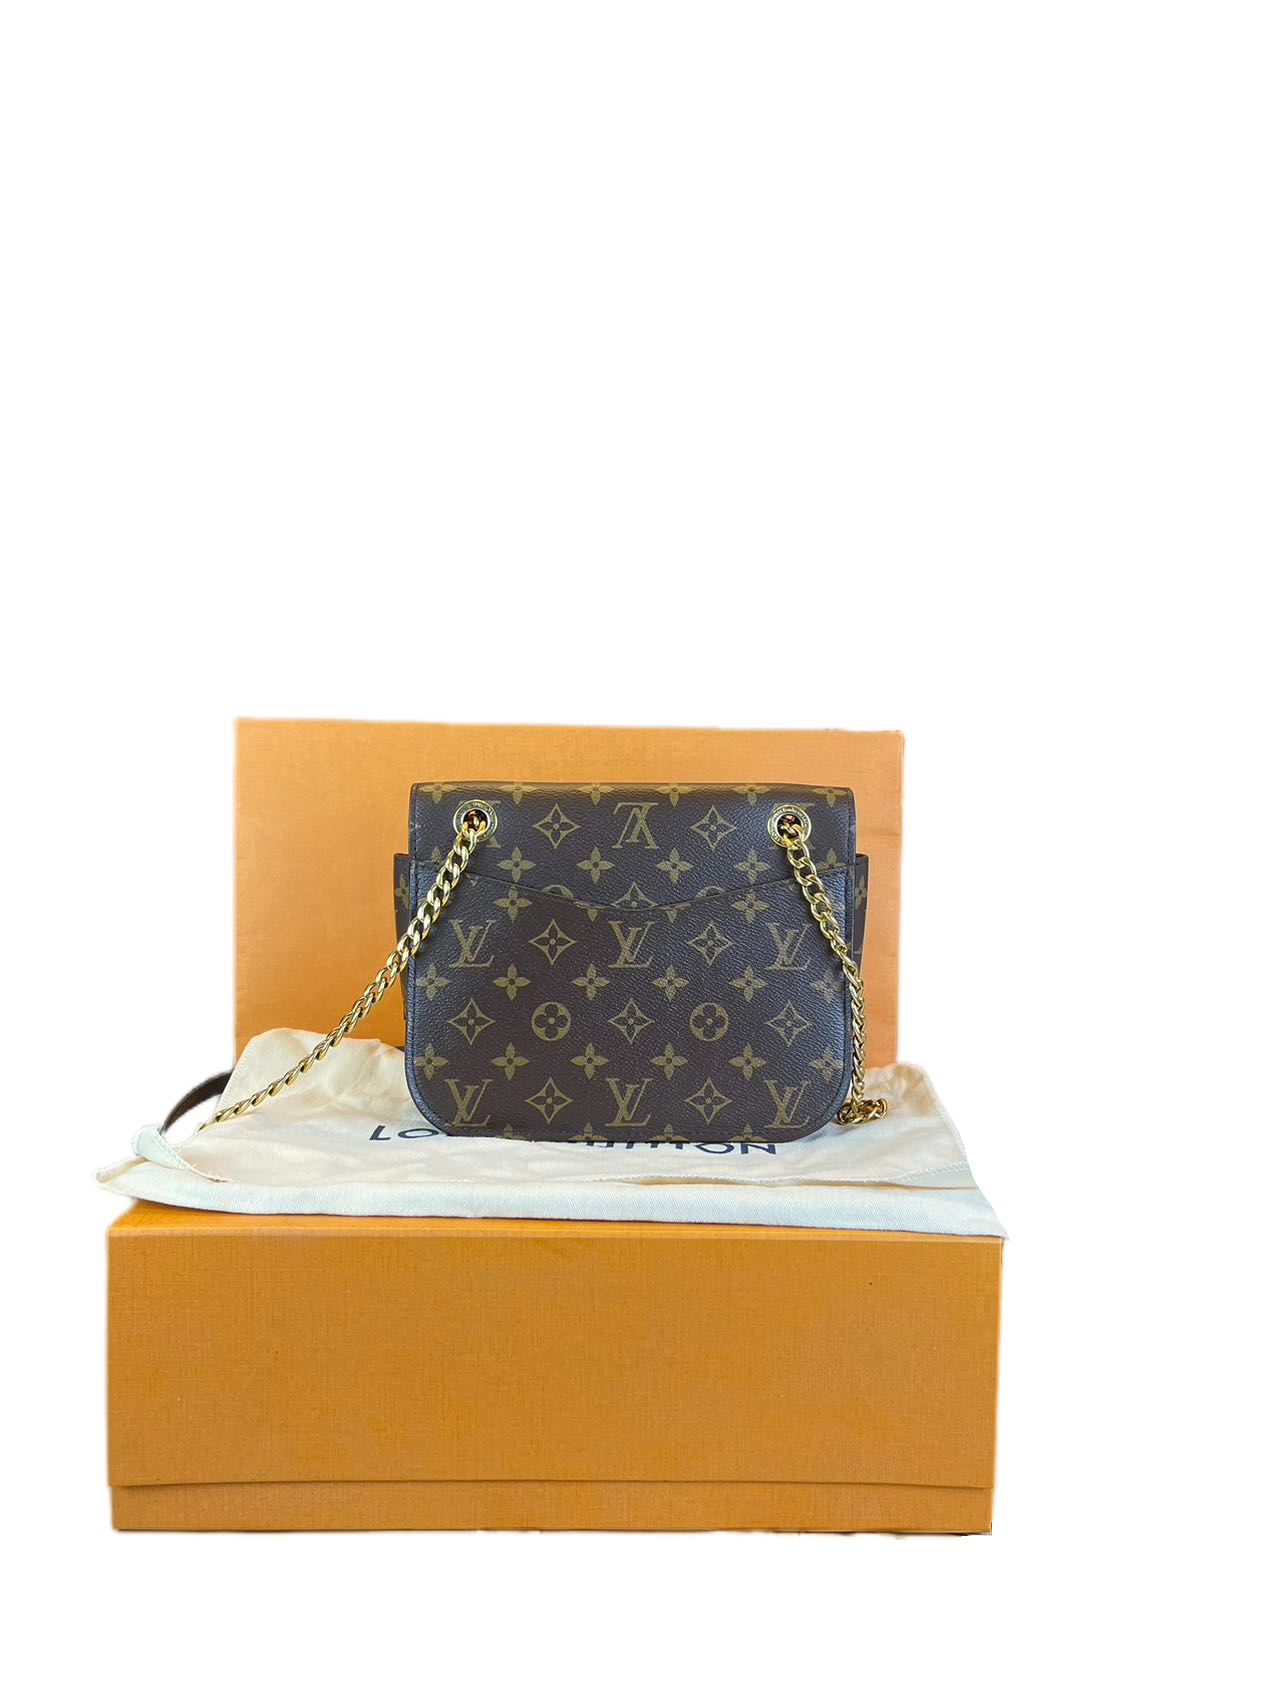 Preloved Louis Vuitton Monogram Canvas Passy MM Shoulder Bag